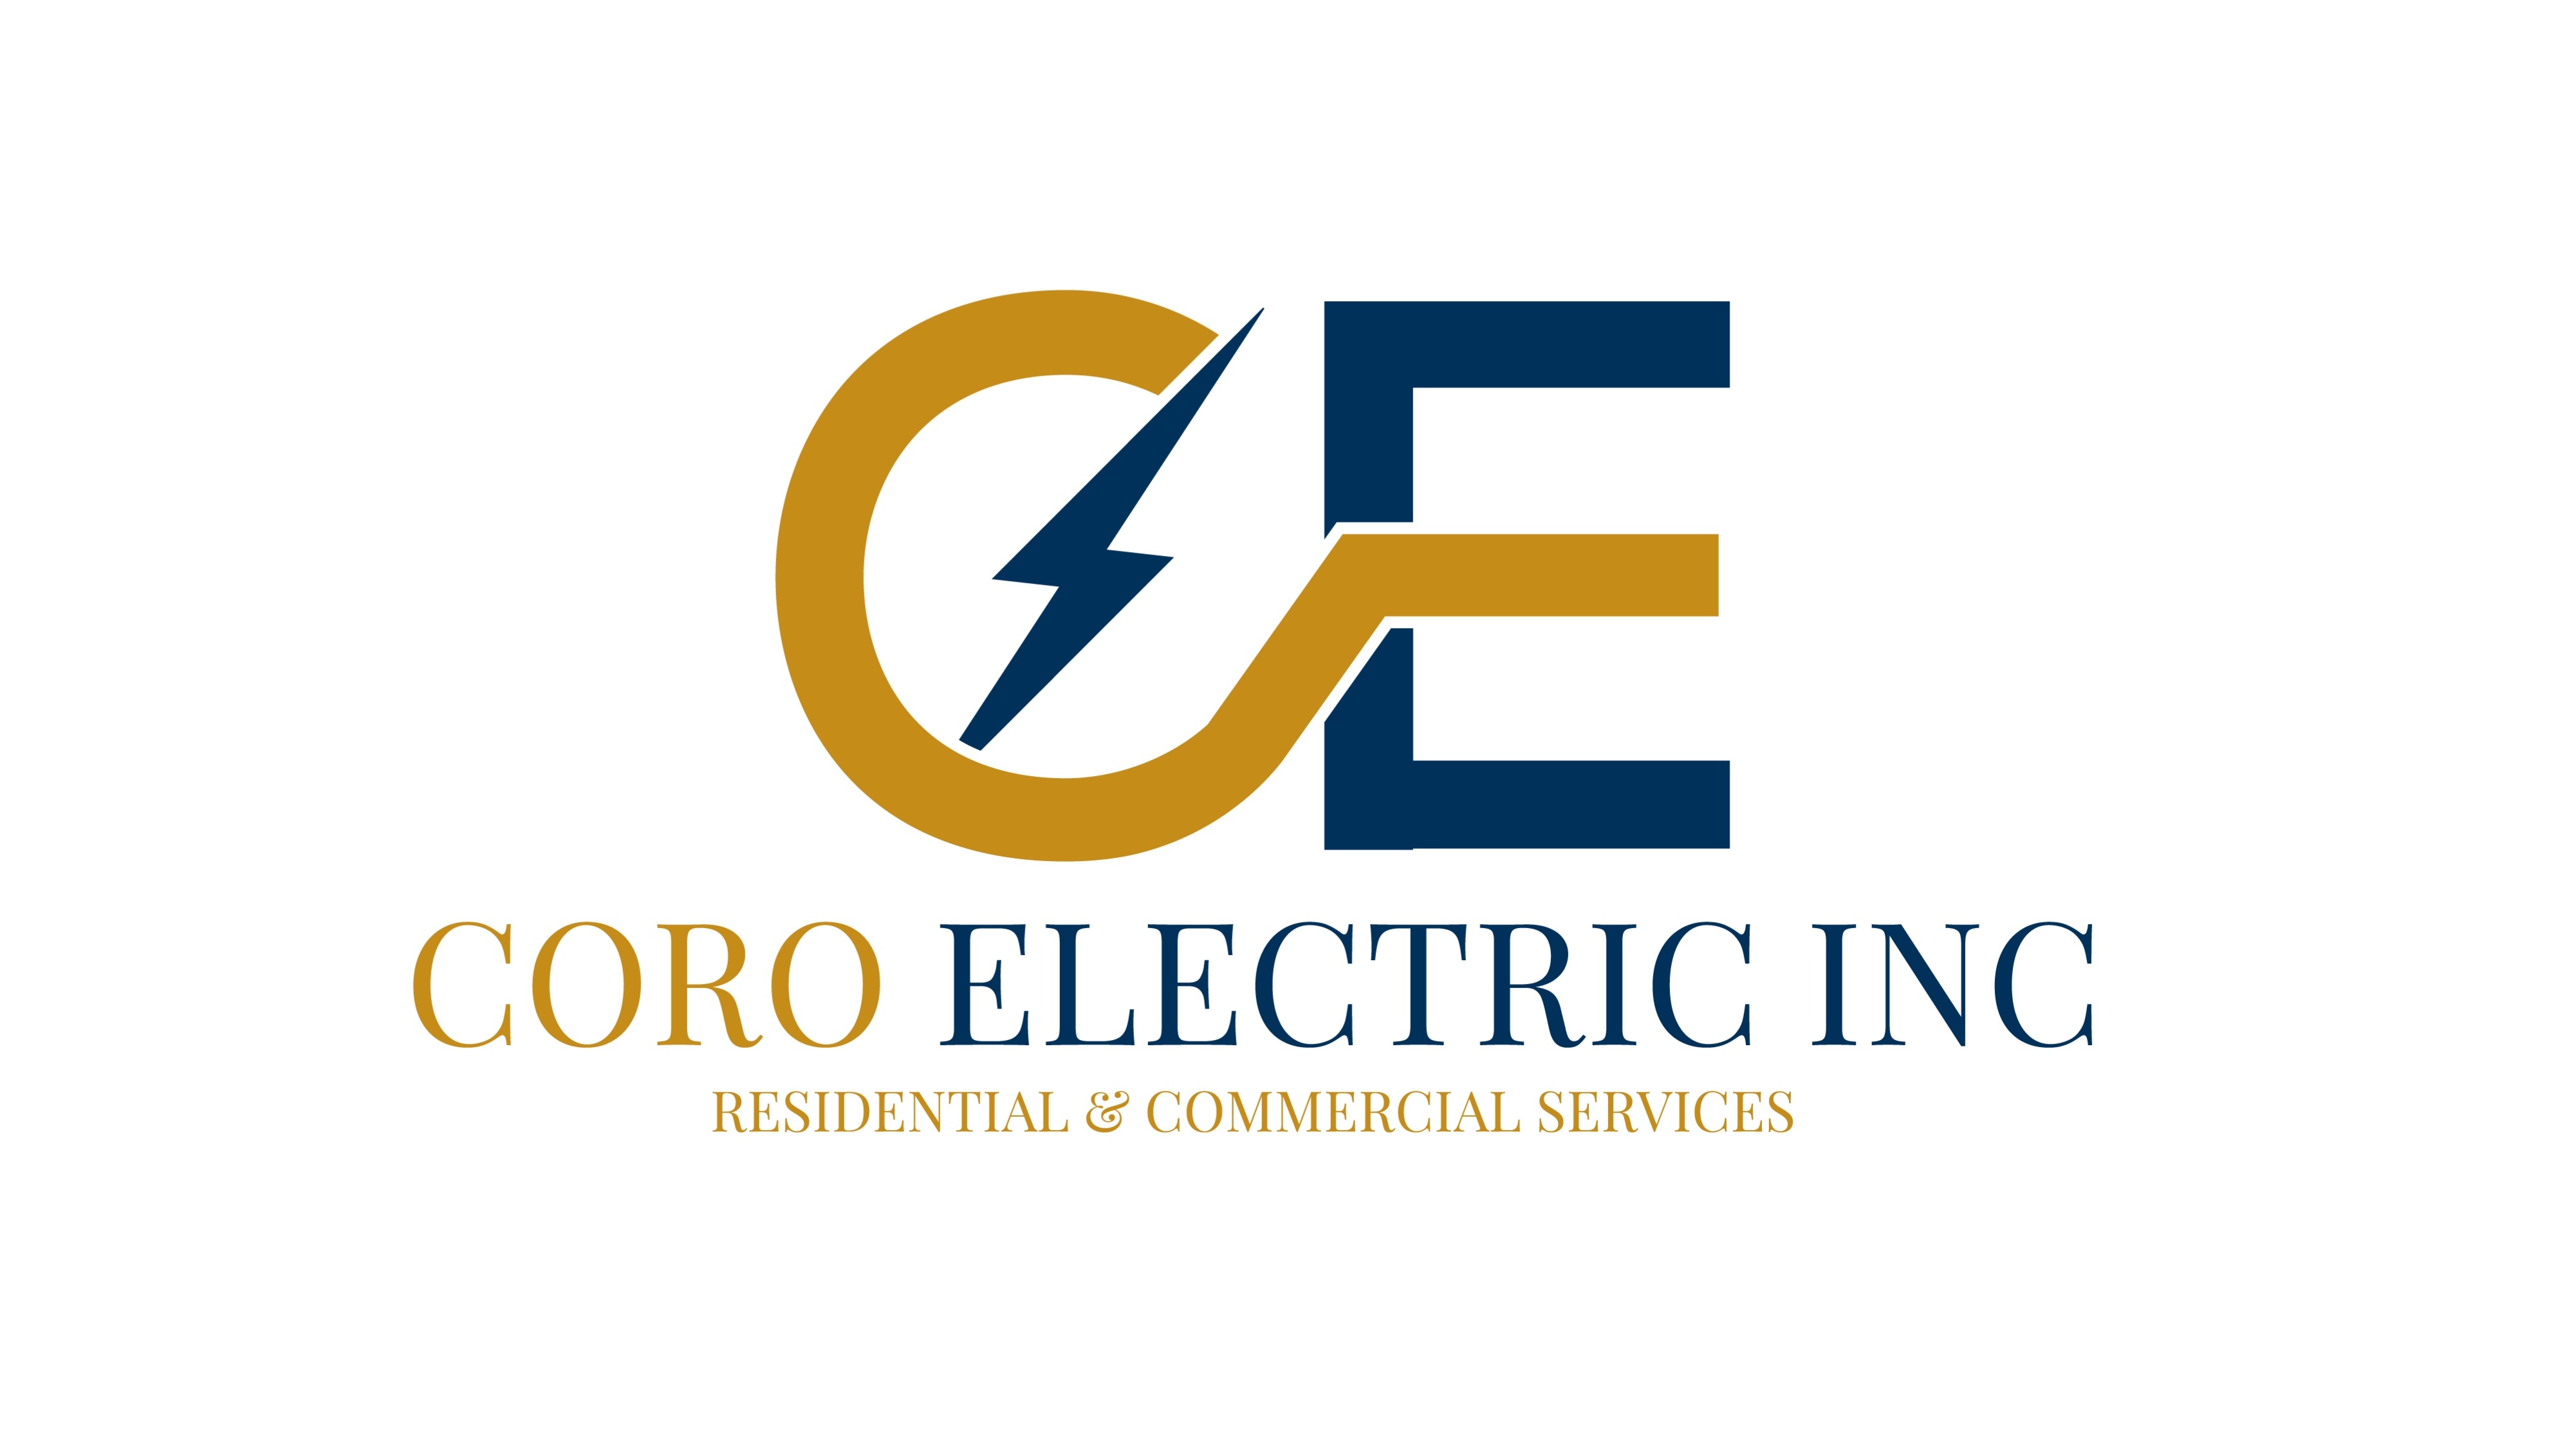 Coro Electric Inc.'s logo